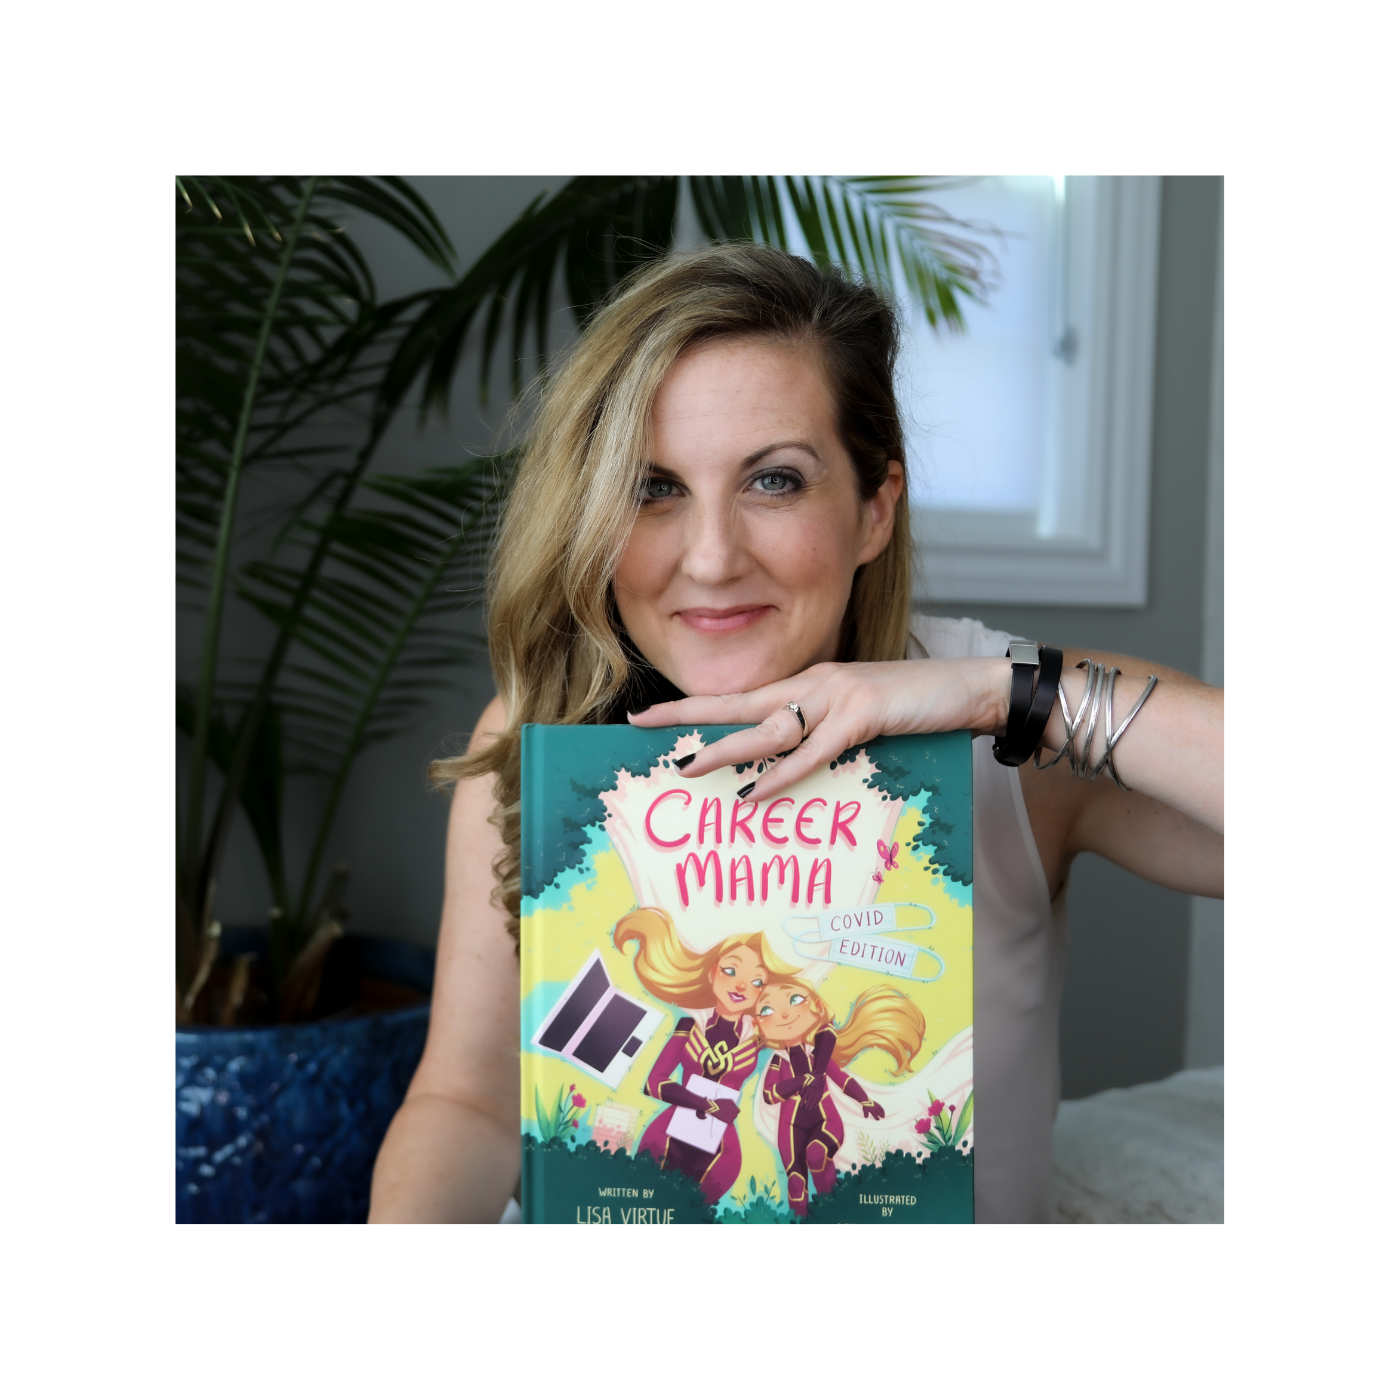 Author Lisa Virtue of the Career Mama - COVID edition book